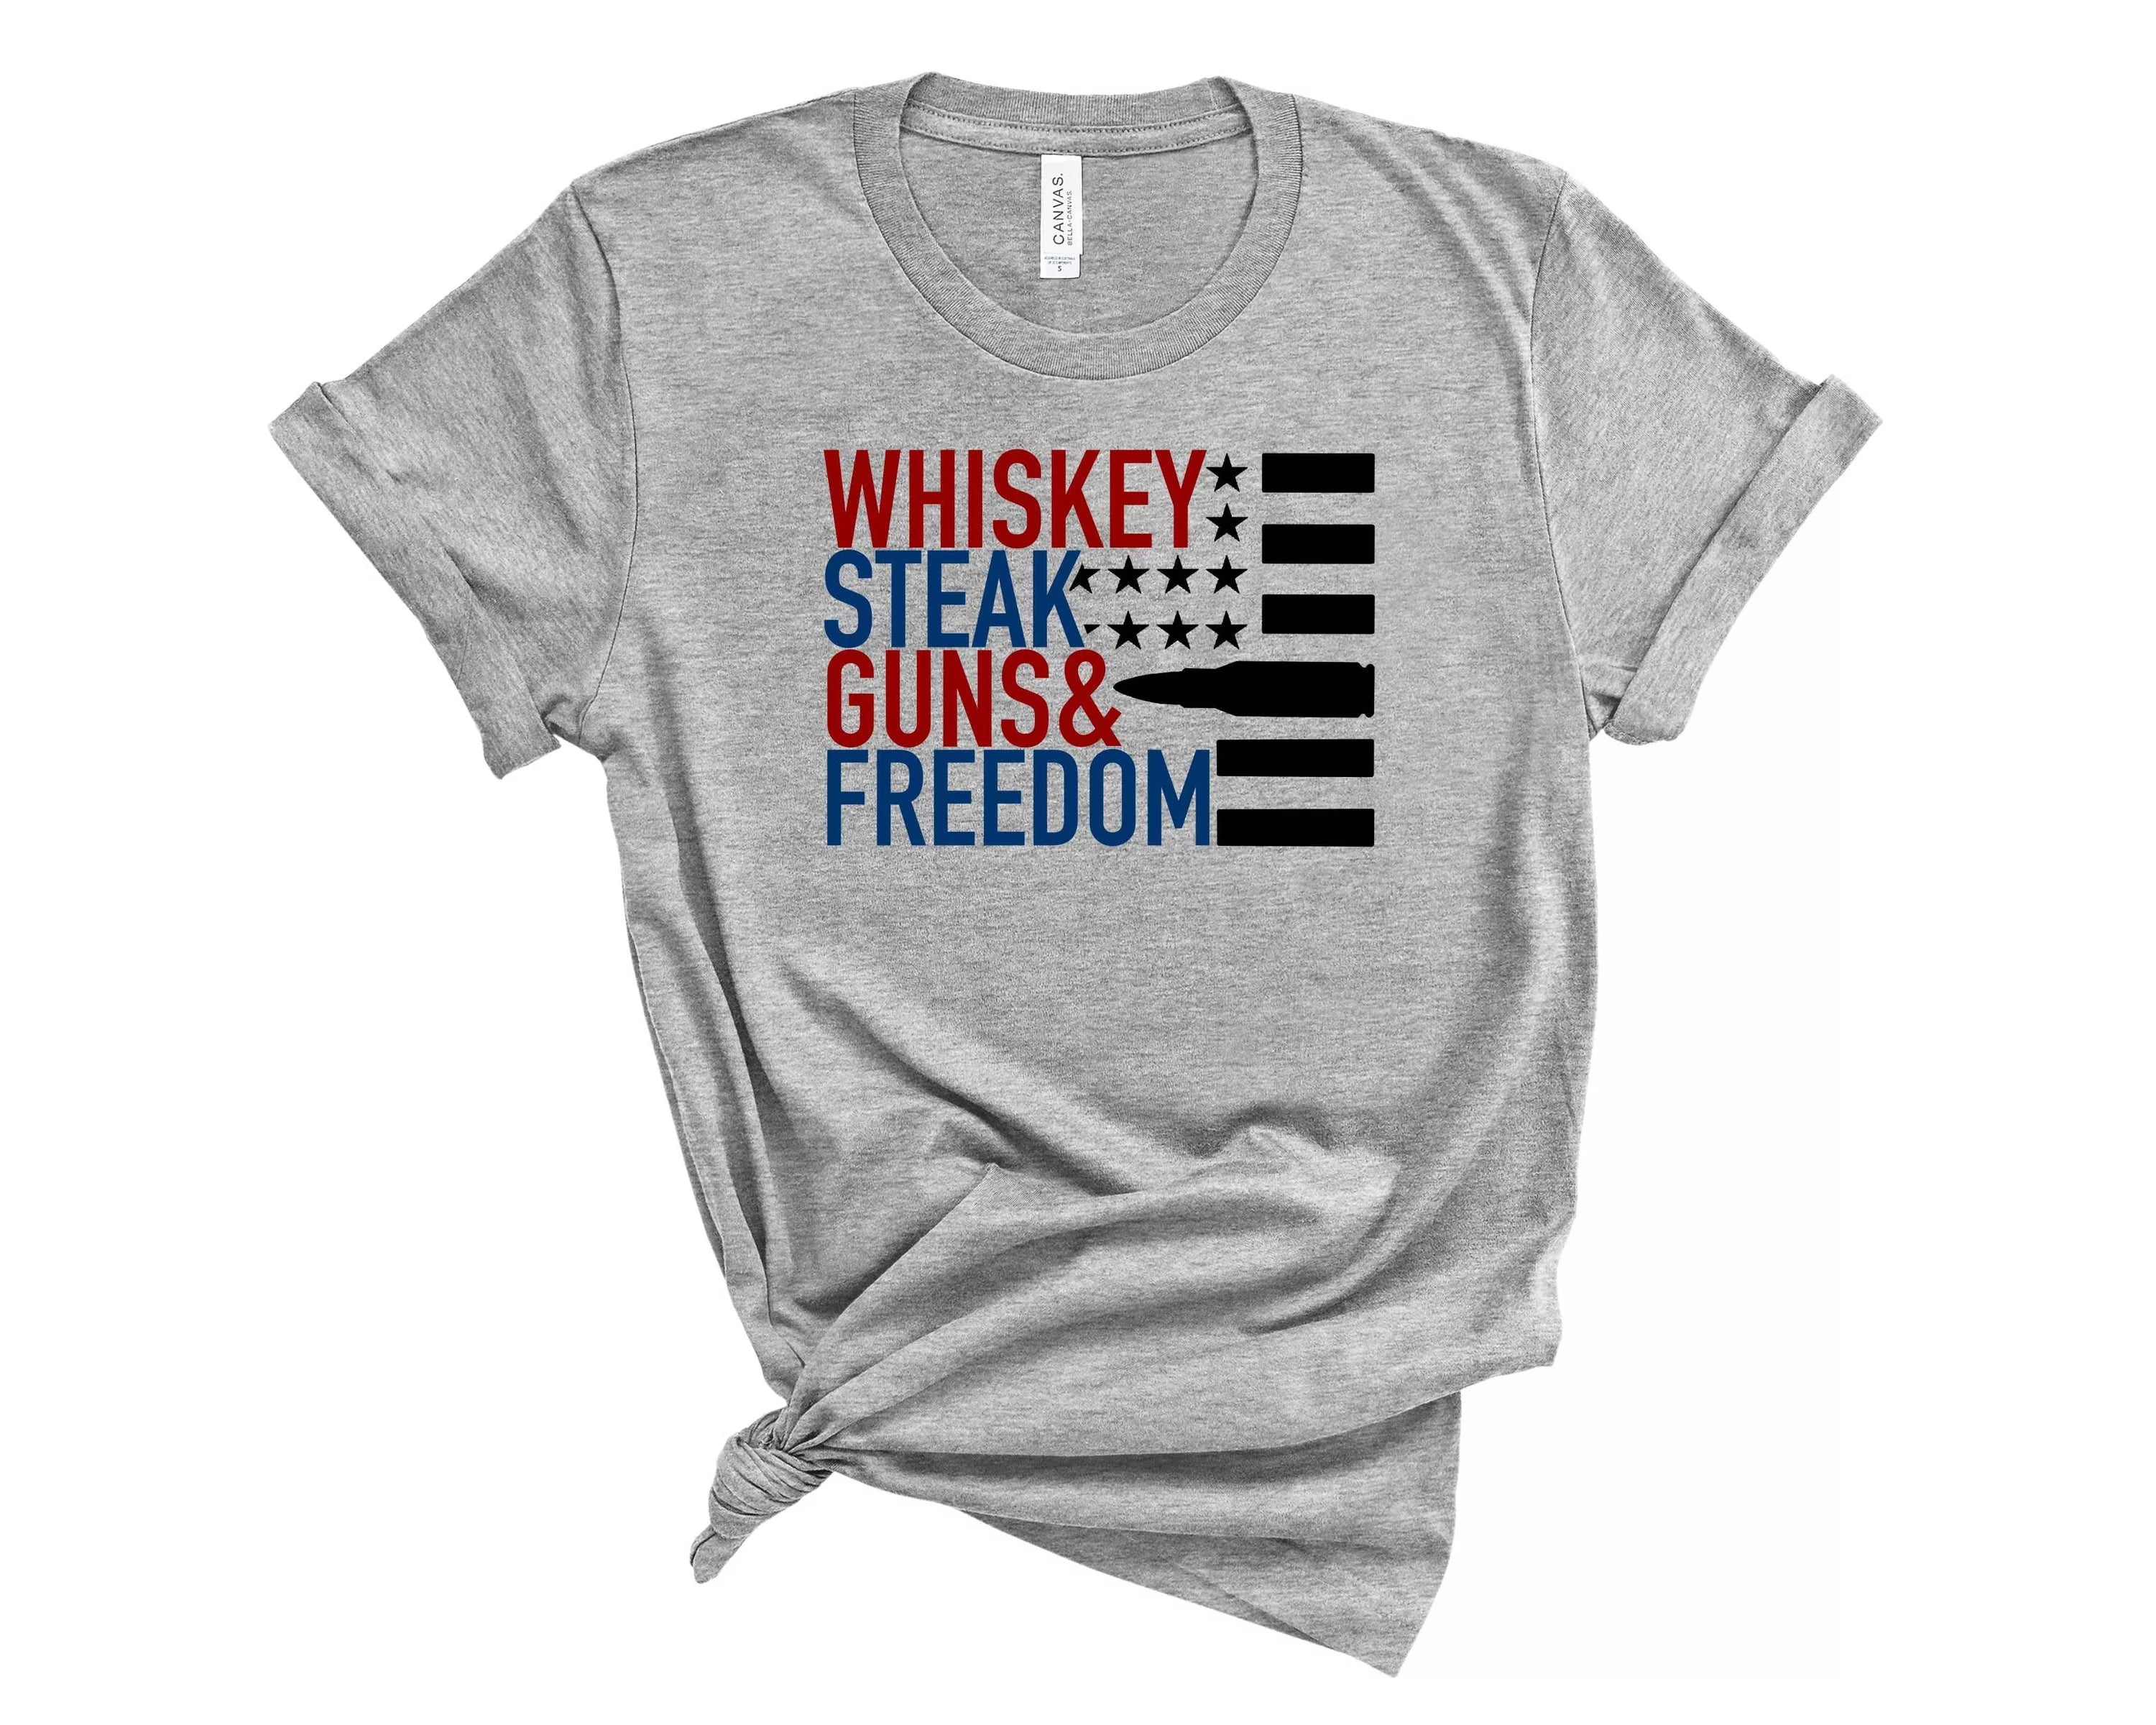 Whiskey Steak Guns & Freedom - Graphic Tee